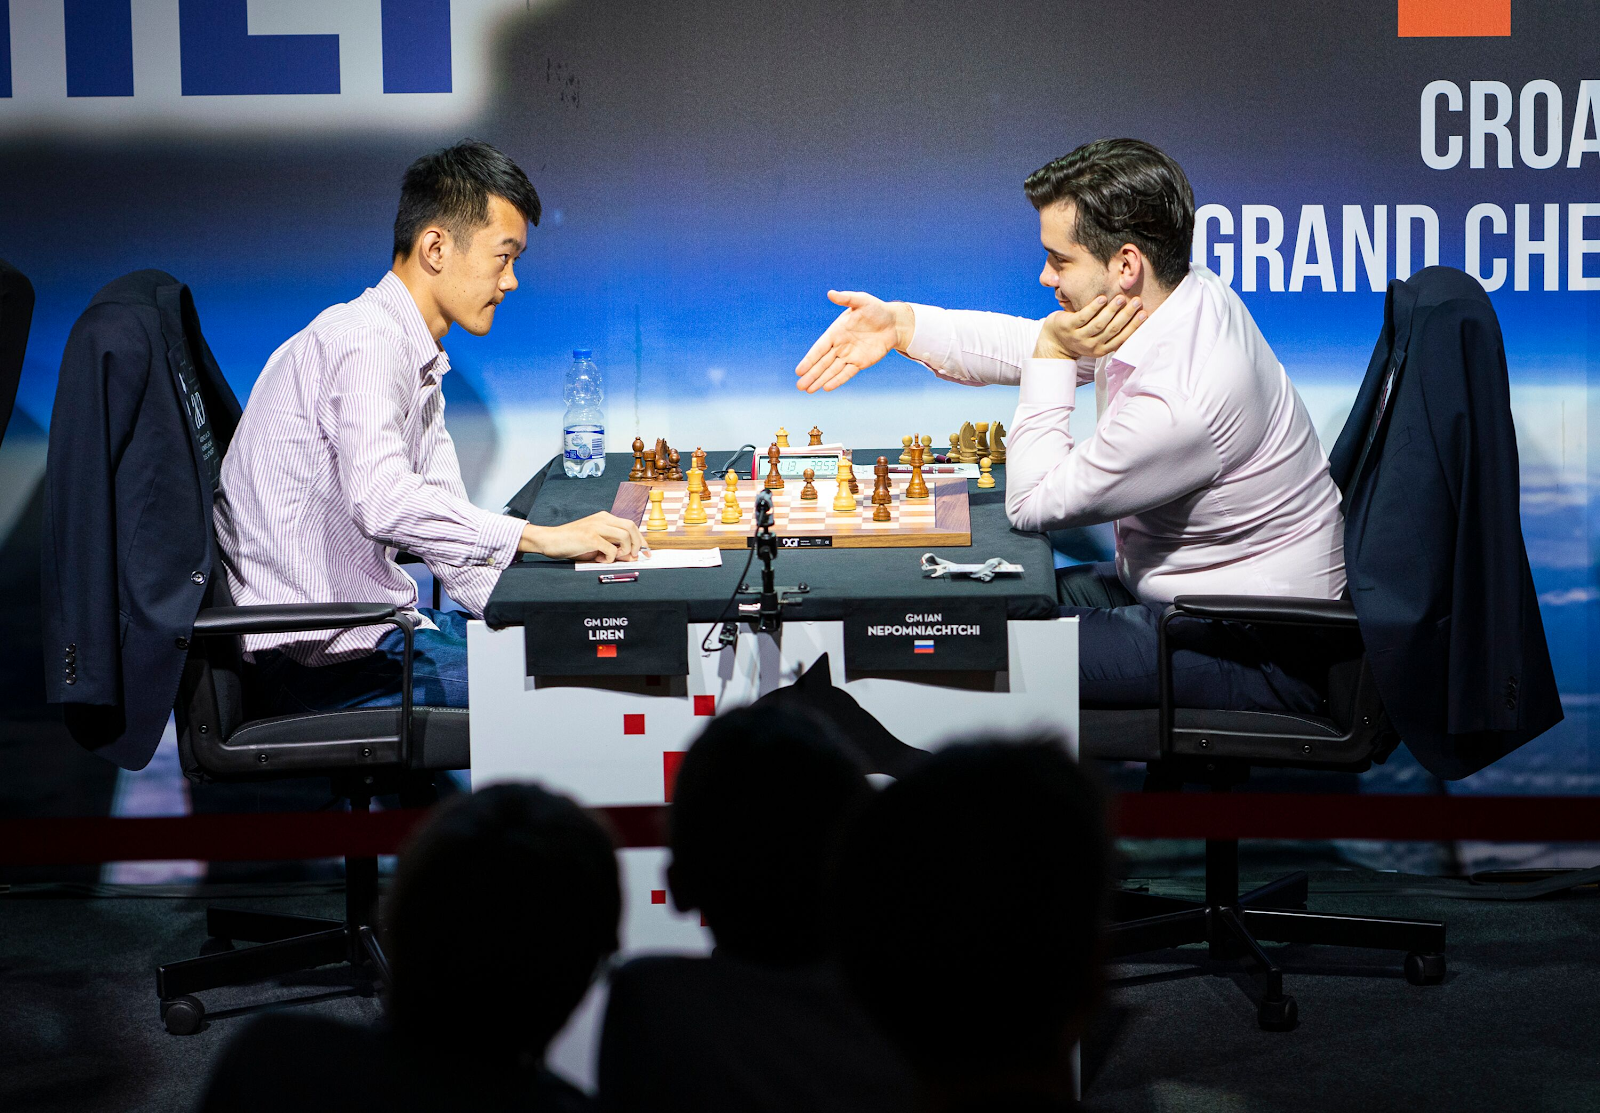 Ding Liren is the winner of Grand Chess Tour 2019